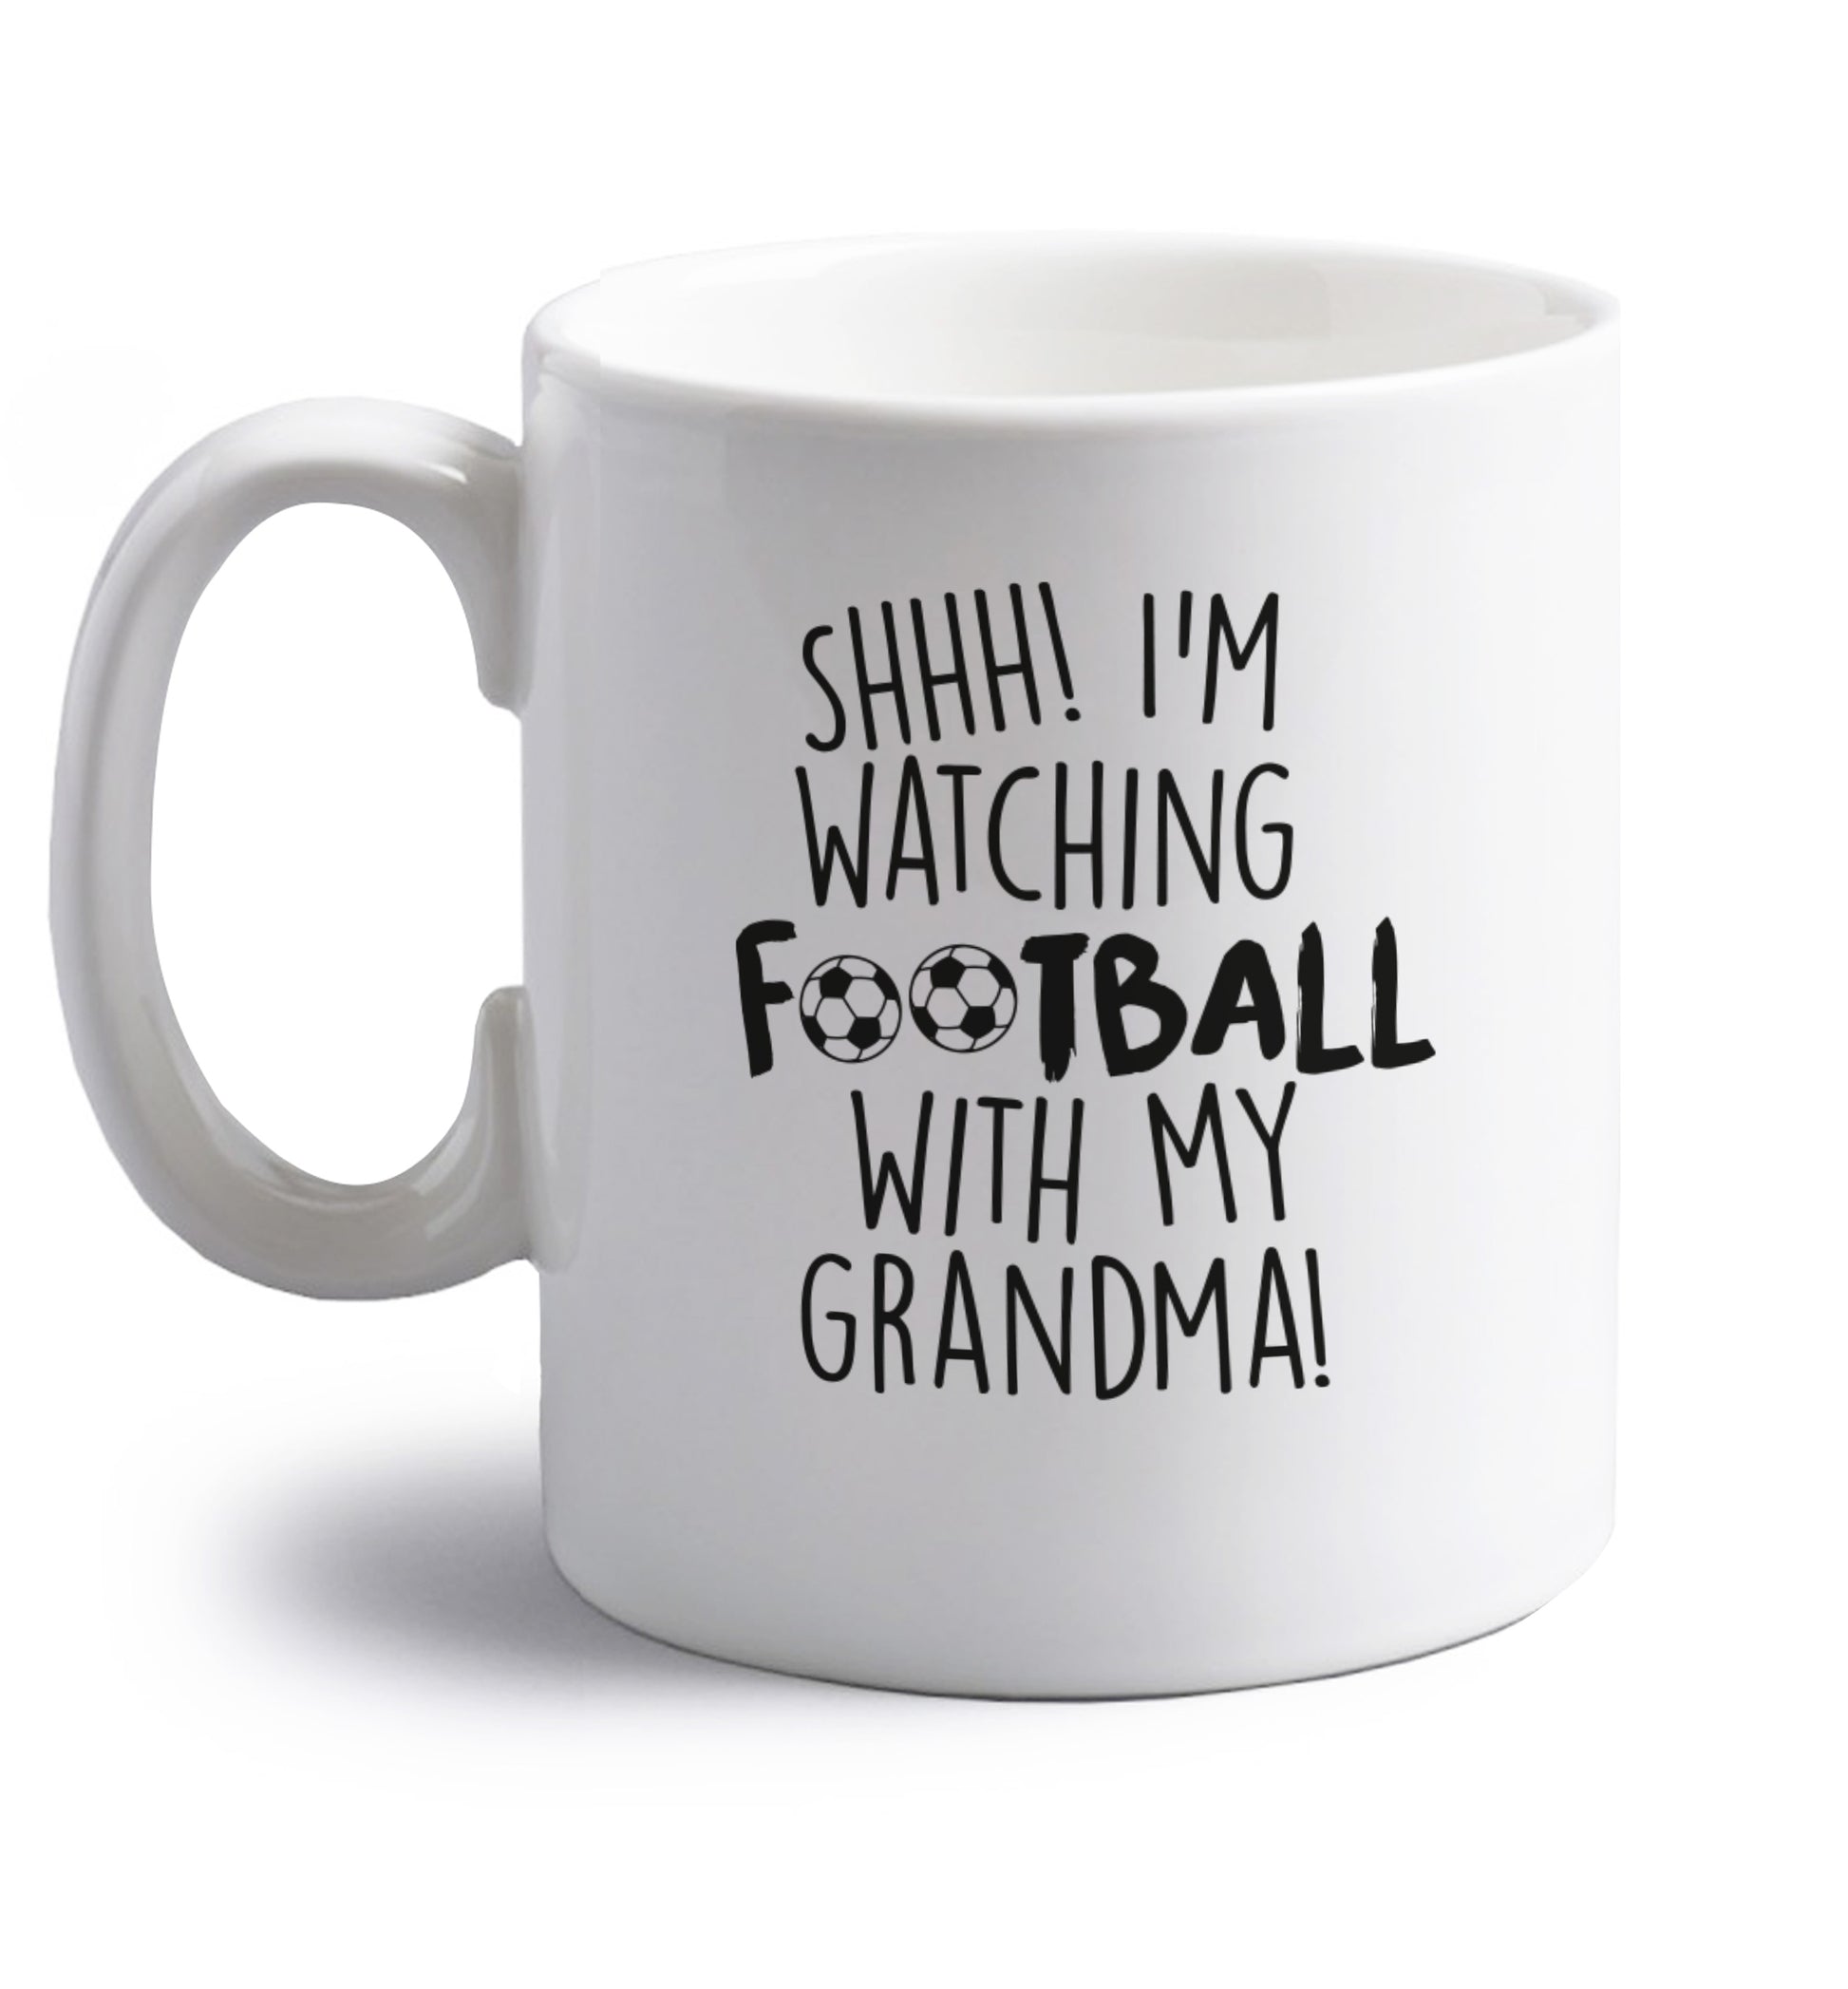 Shhh I'm watching football with my grandma right handed white ceramic mug 